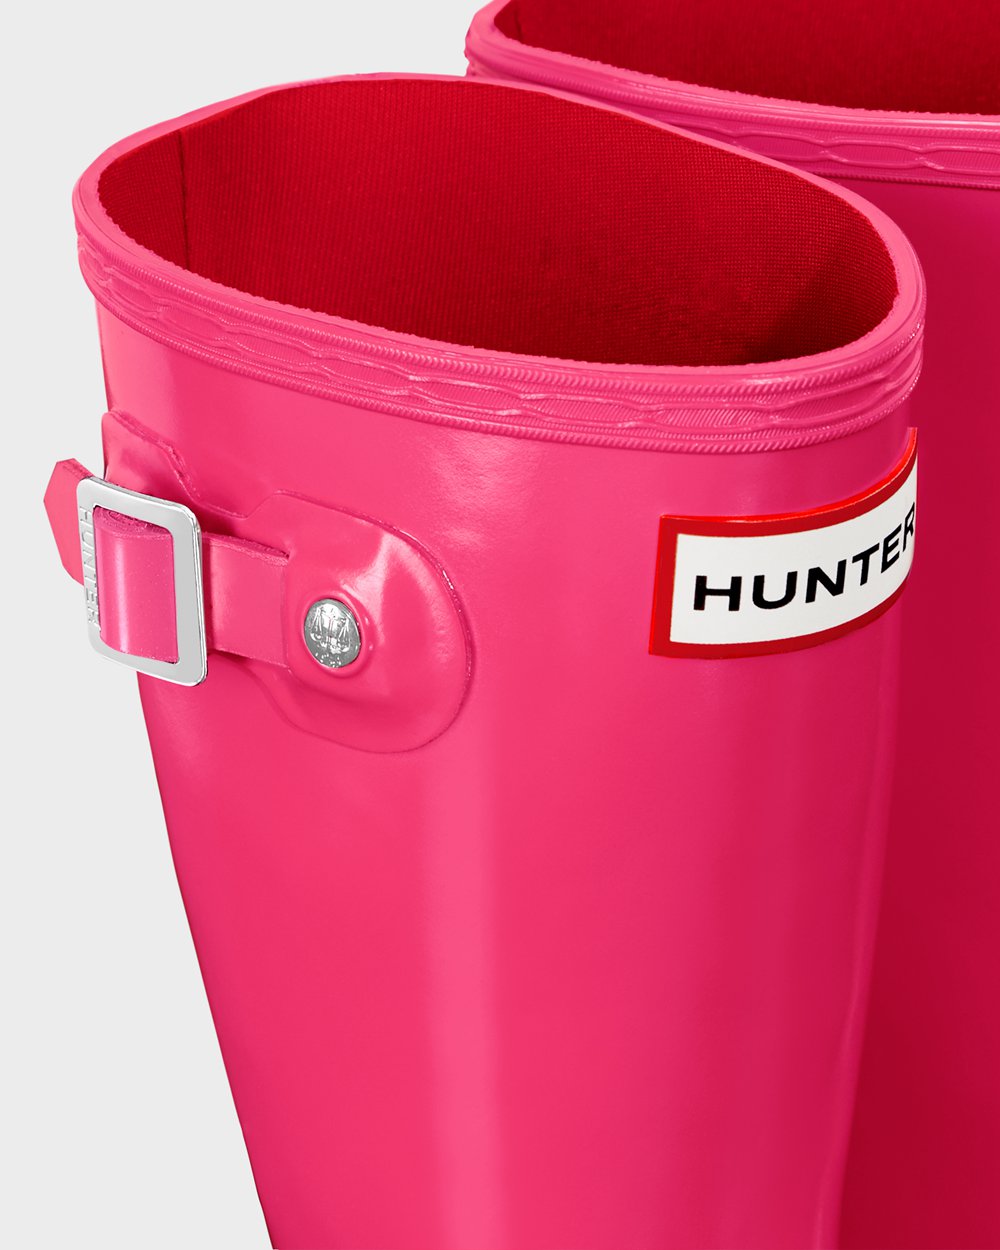 Kids Rain Boots - Hunter Original Big Gloss (45EGMKSPH) - Light Pink